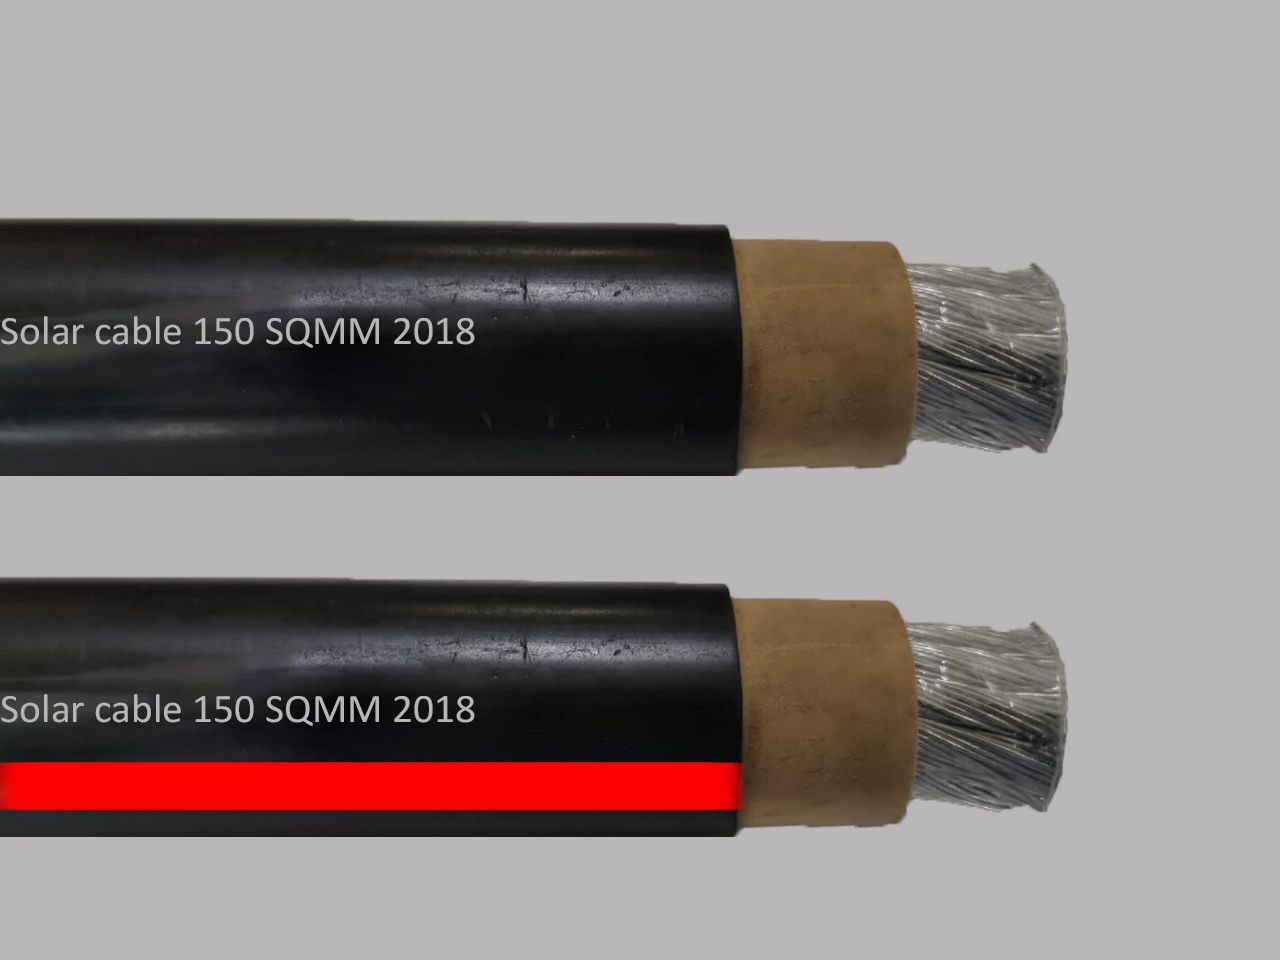 en-certified-dc-solar-cable-150sqm-500mtr-drum-red_1_1_1_1_1.jpg